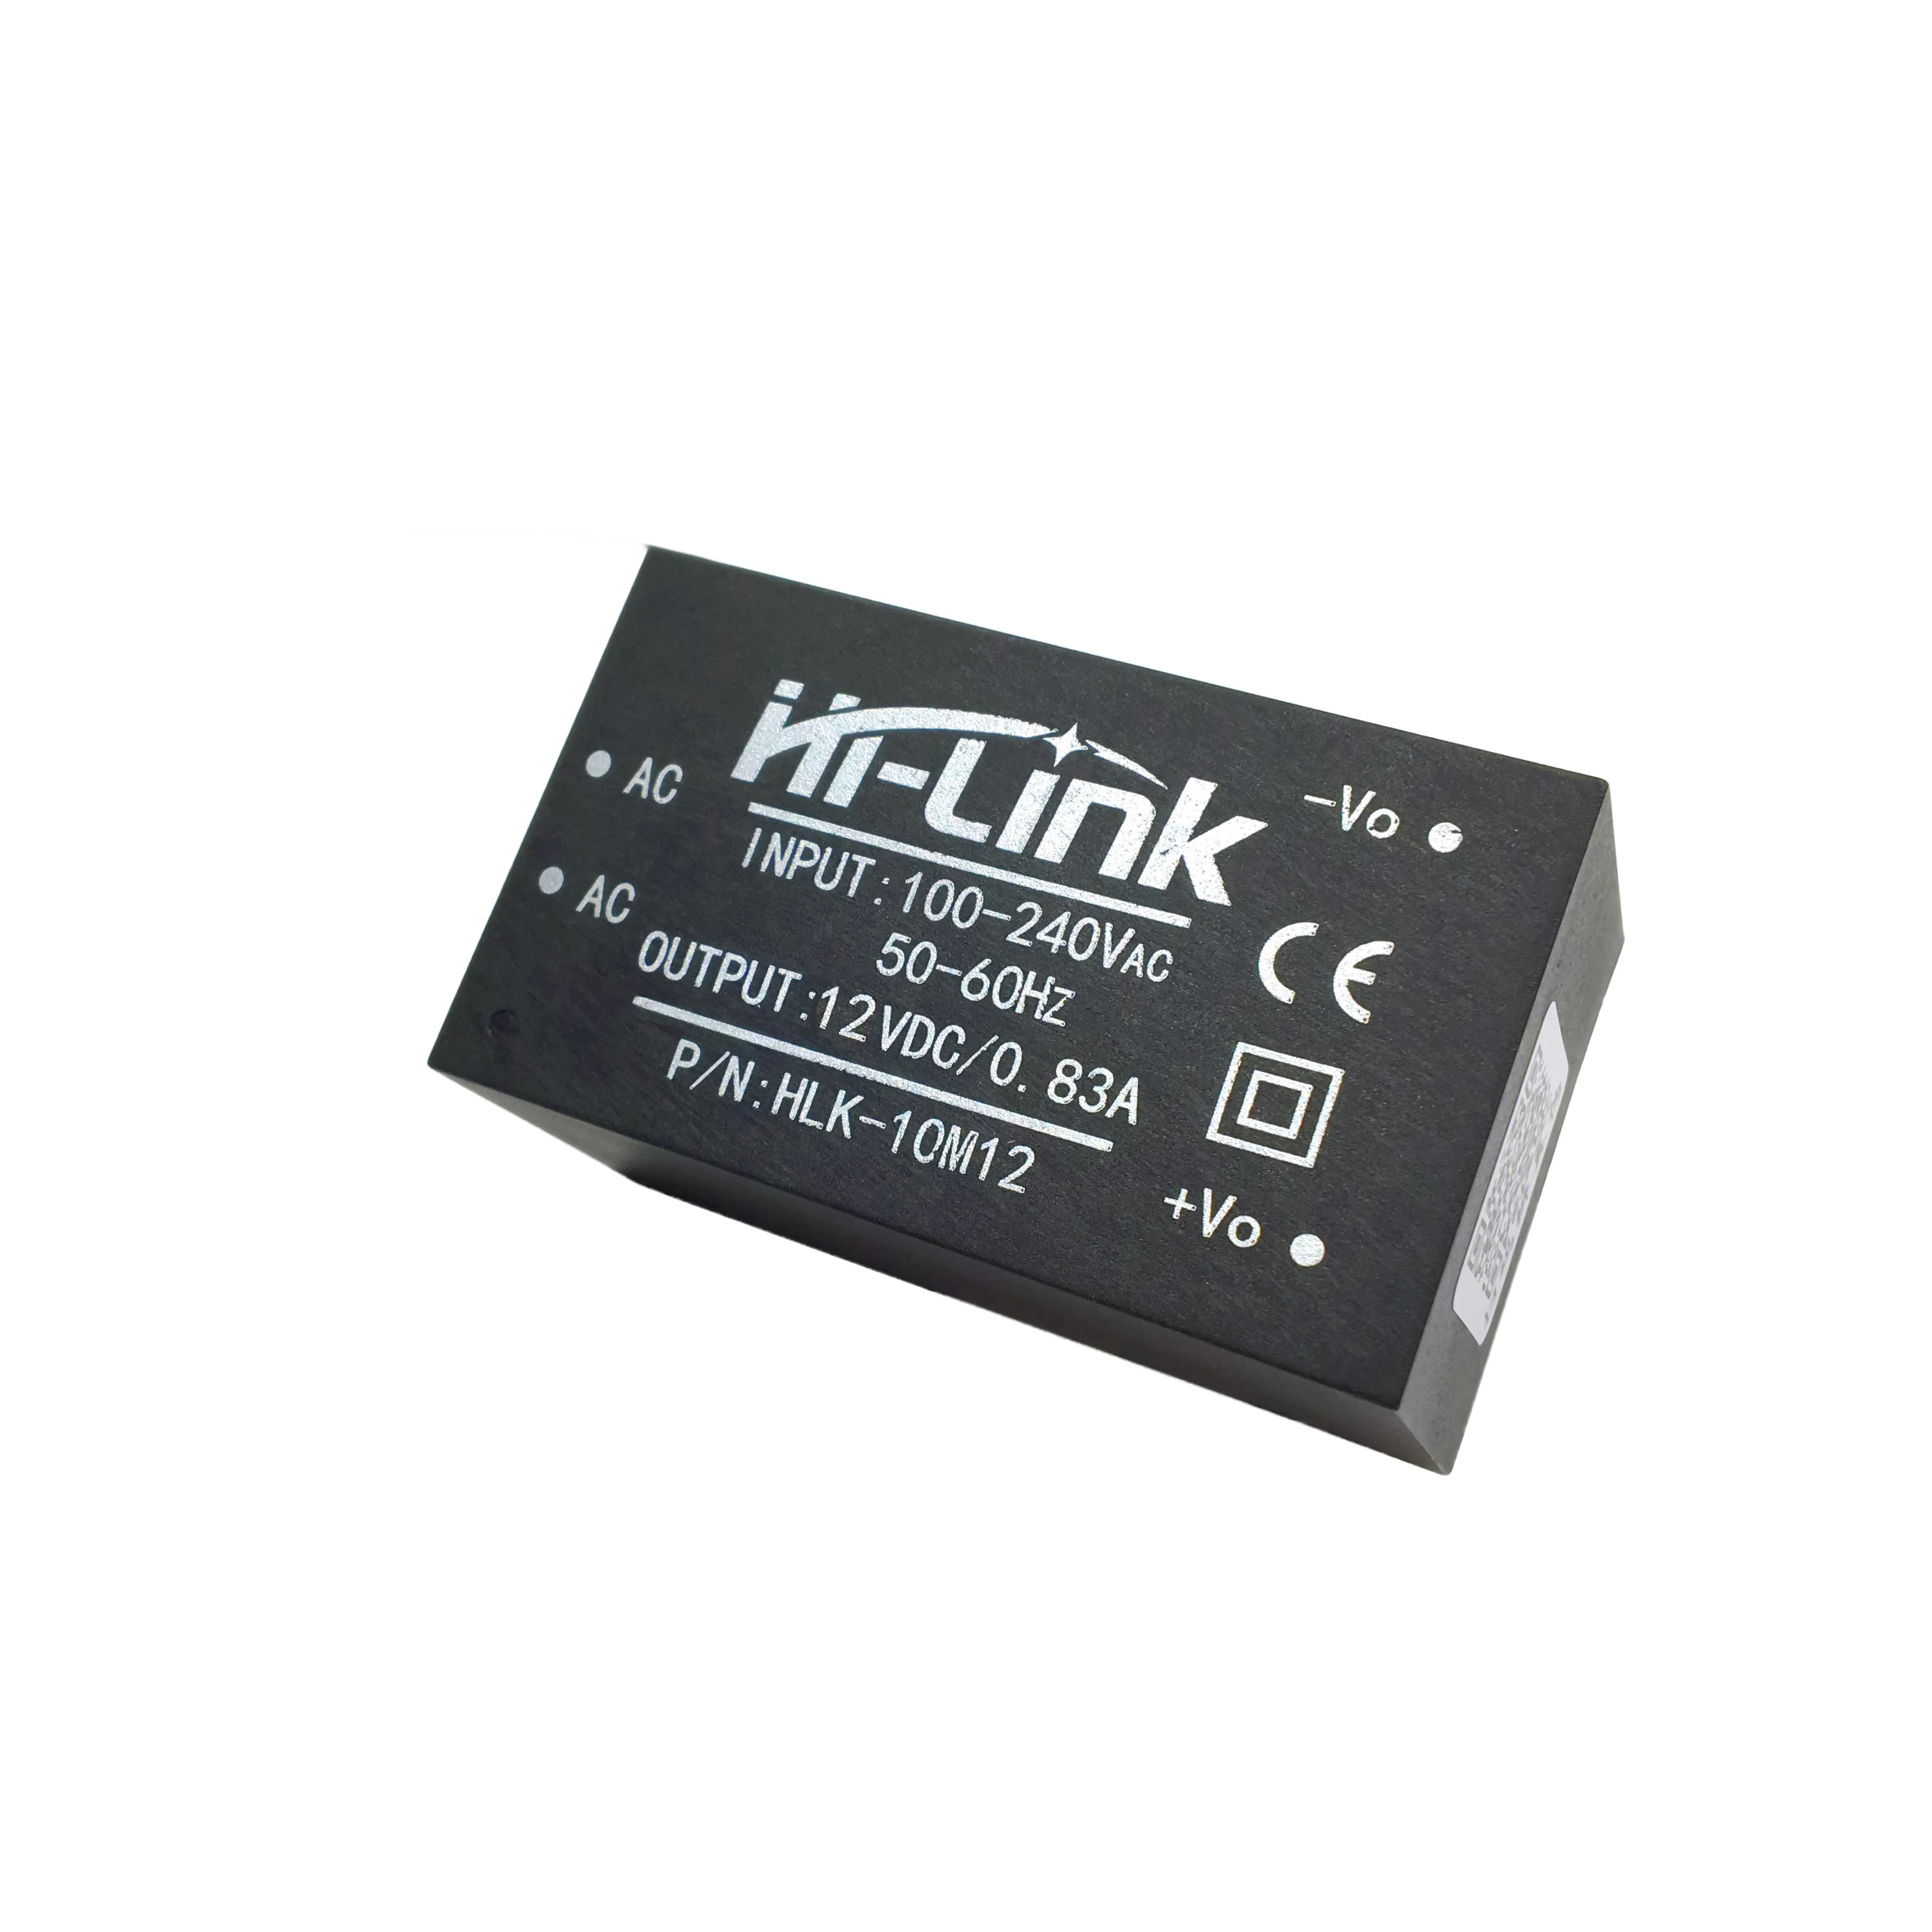 HLK-10M12 ac-dc power supply module hilink original 10W 12V 830mA